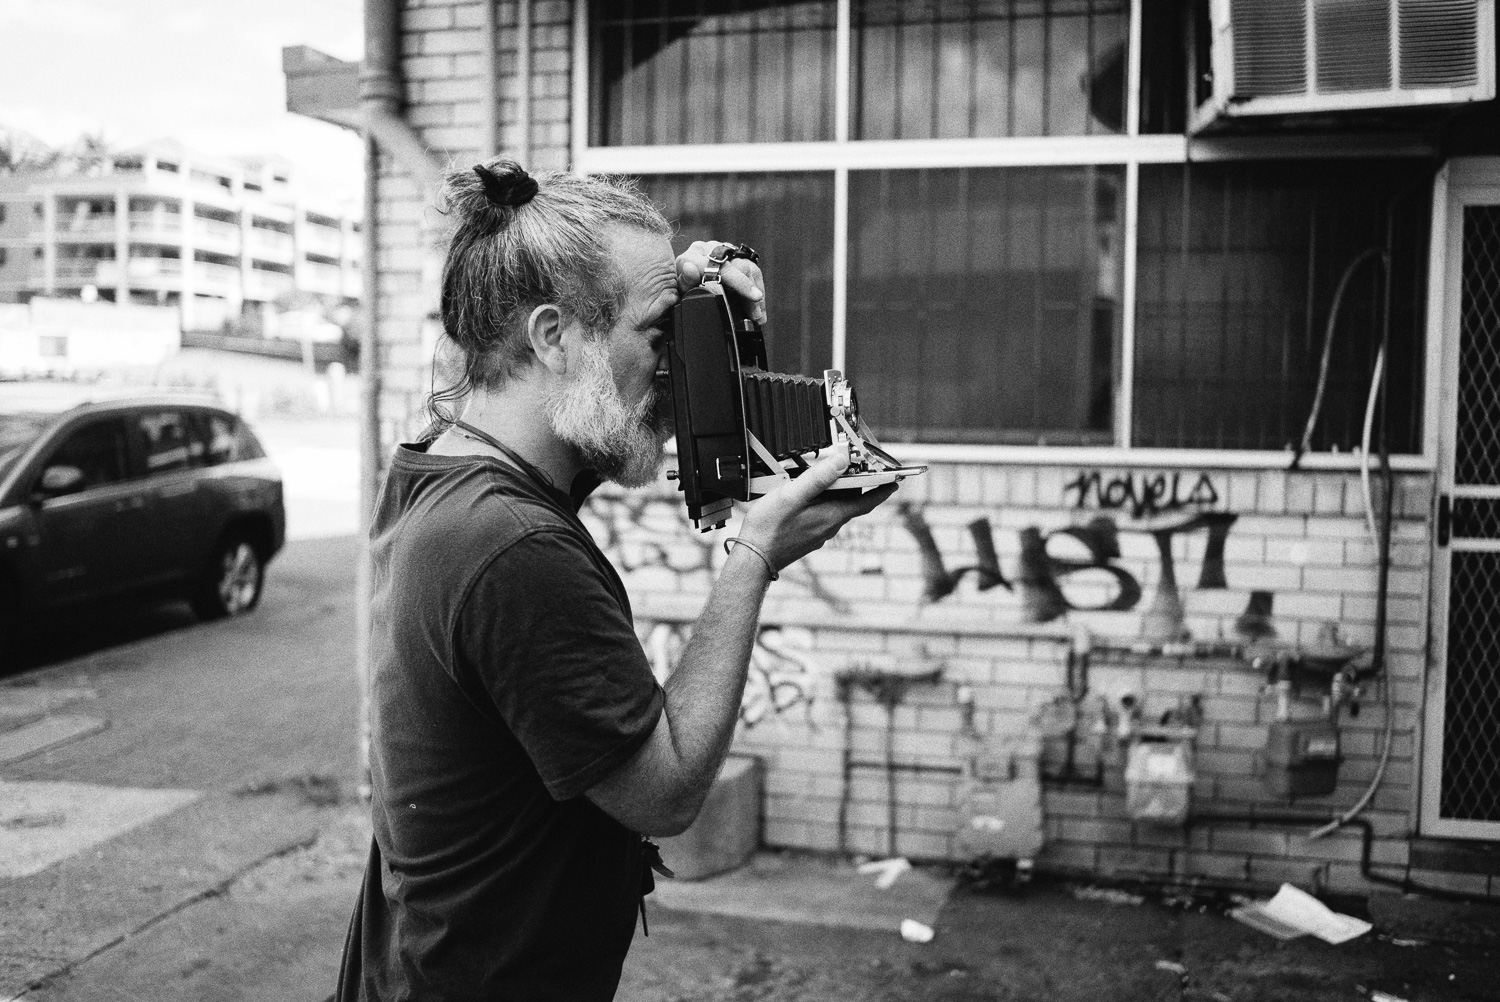  Simon making a 5x4 black and white portrait of Zoe on his Polaroid Razzle conversion. 